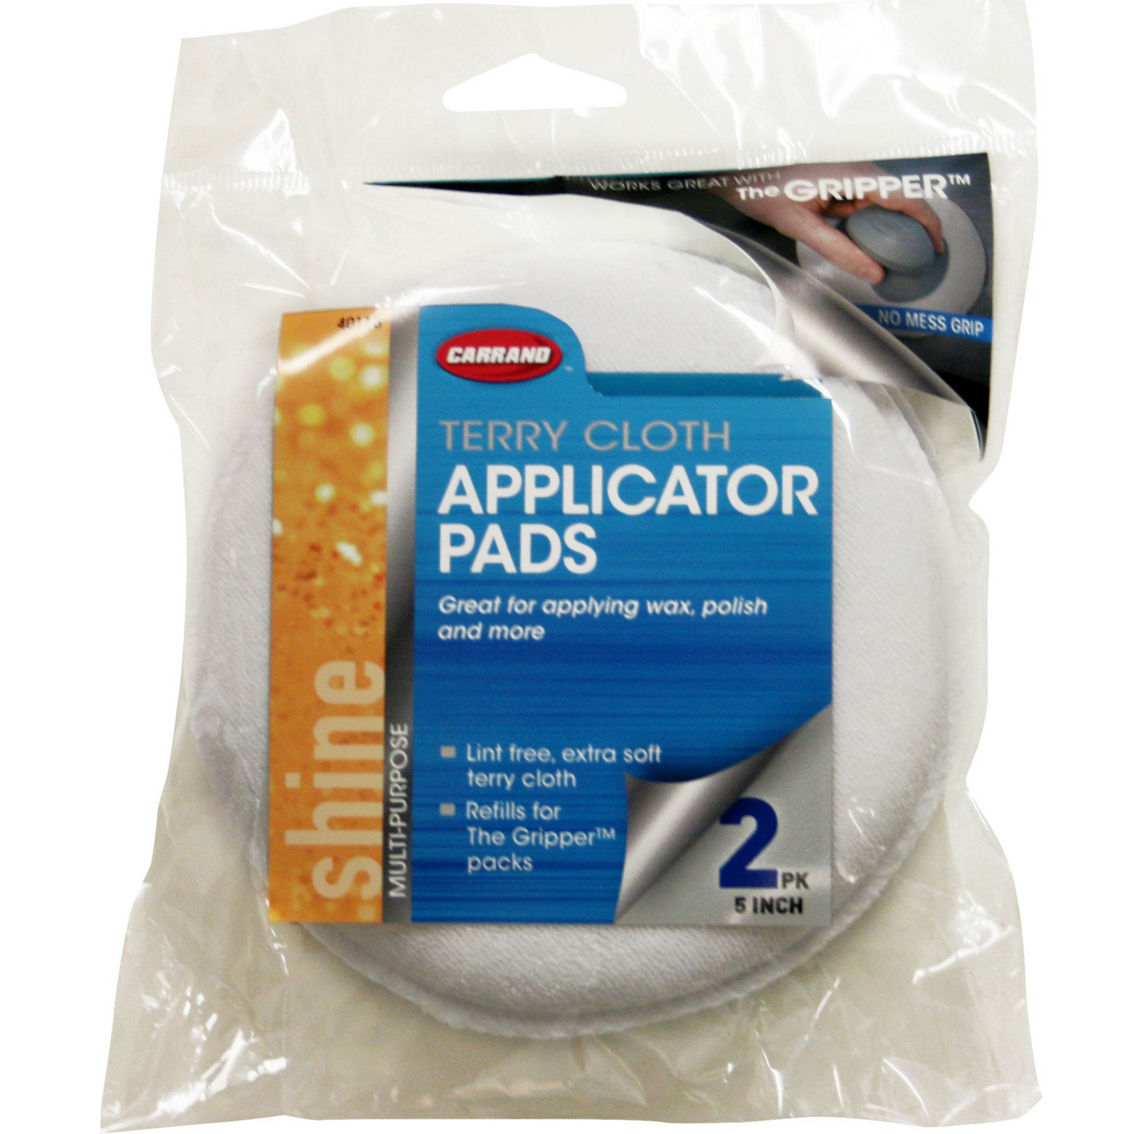 Detailers Choice Wax Applicator Pads, 2 Pack, Cleaning & Detailing, Patio, Garden & Garage